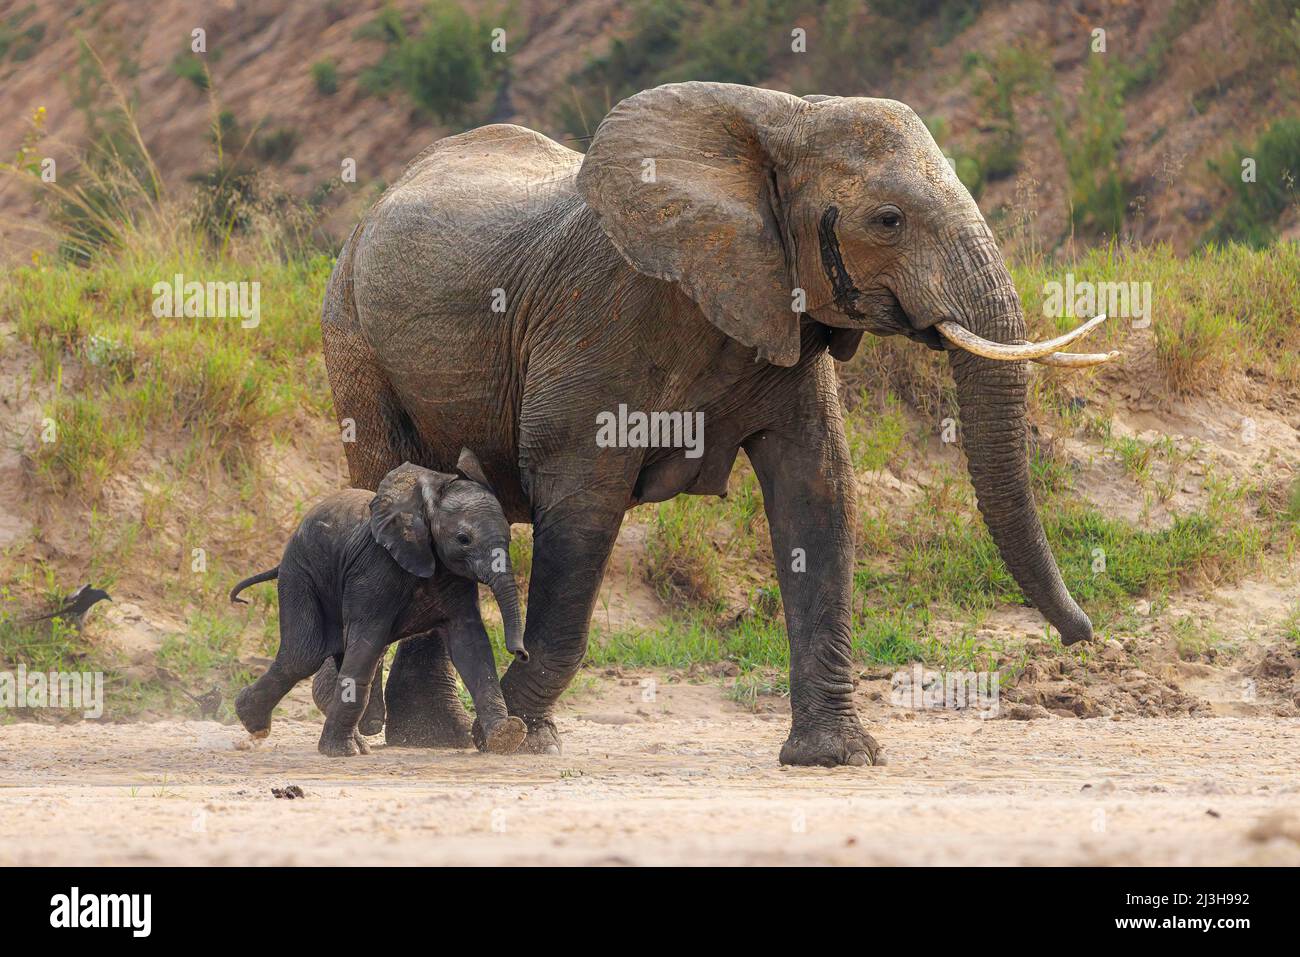 Uganda, Nwoya District, Pakwach, Murchison falls National Park, savannah elephant and its baby Stock Photo